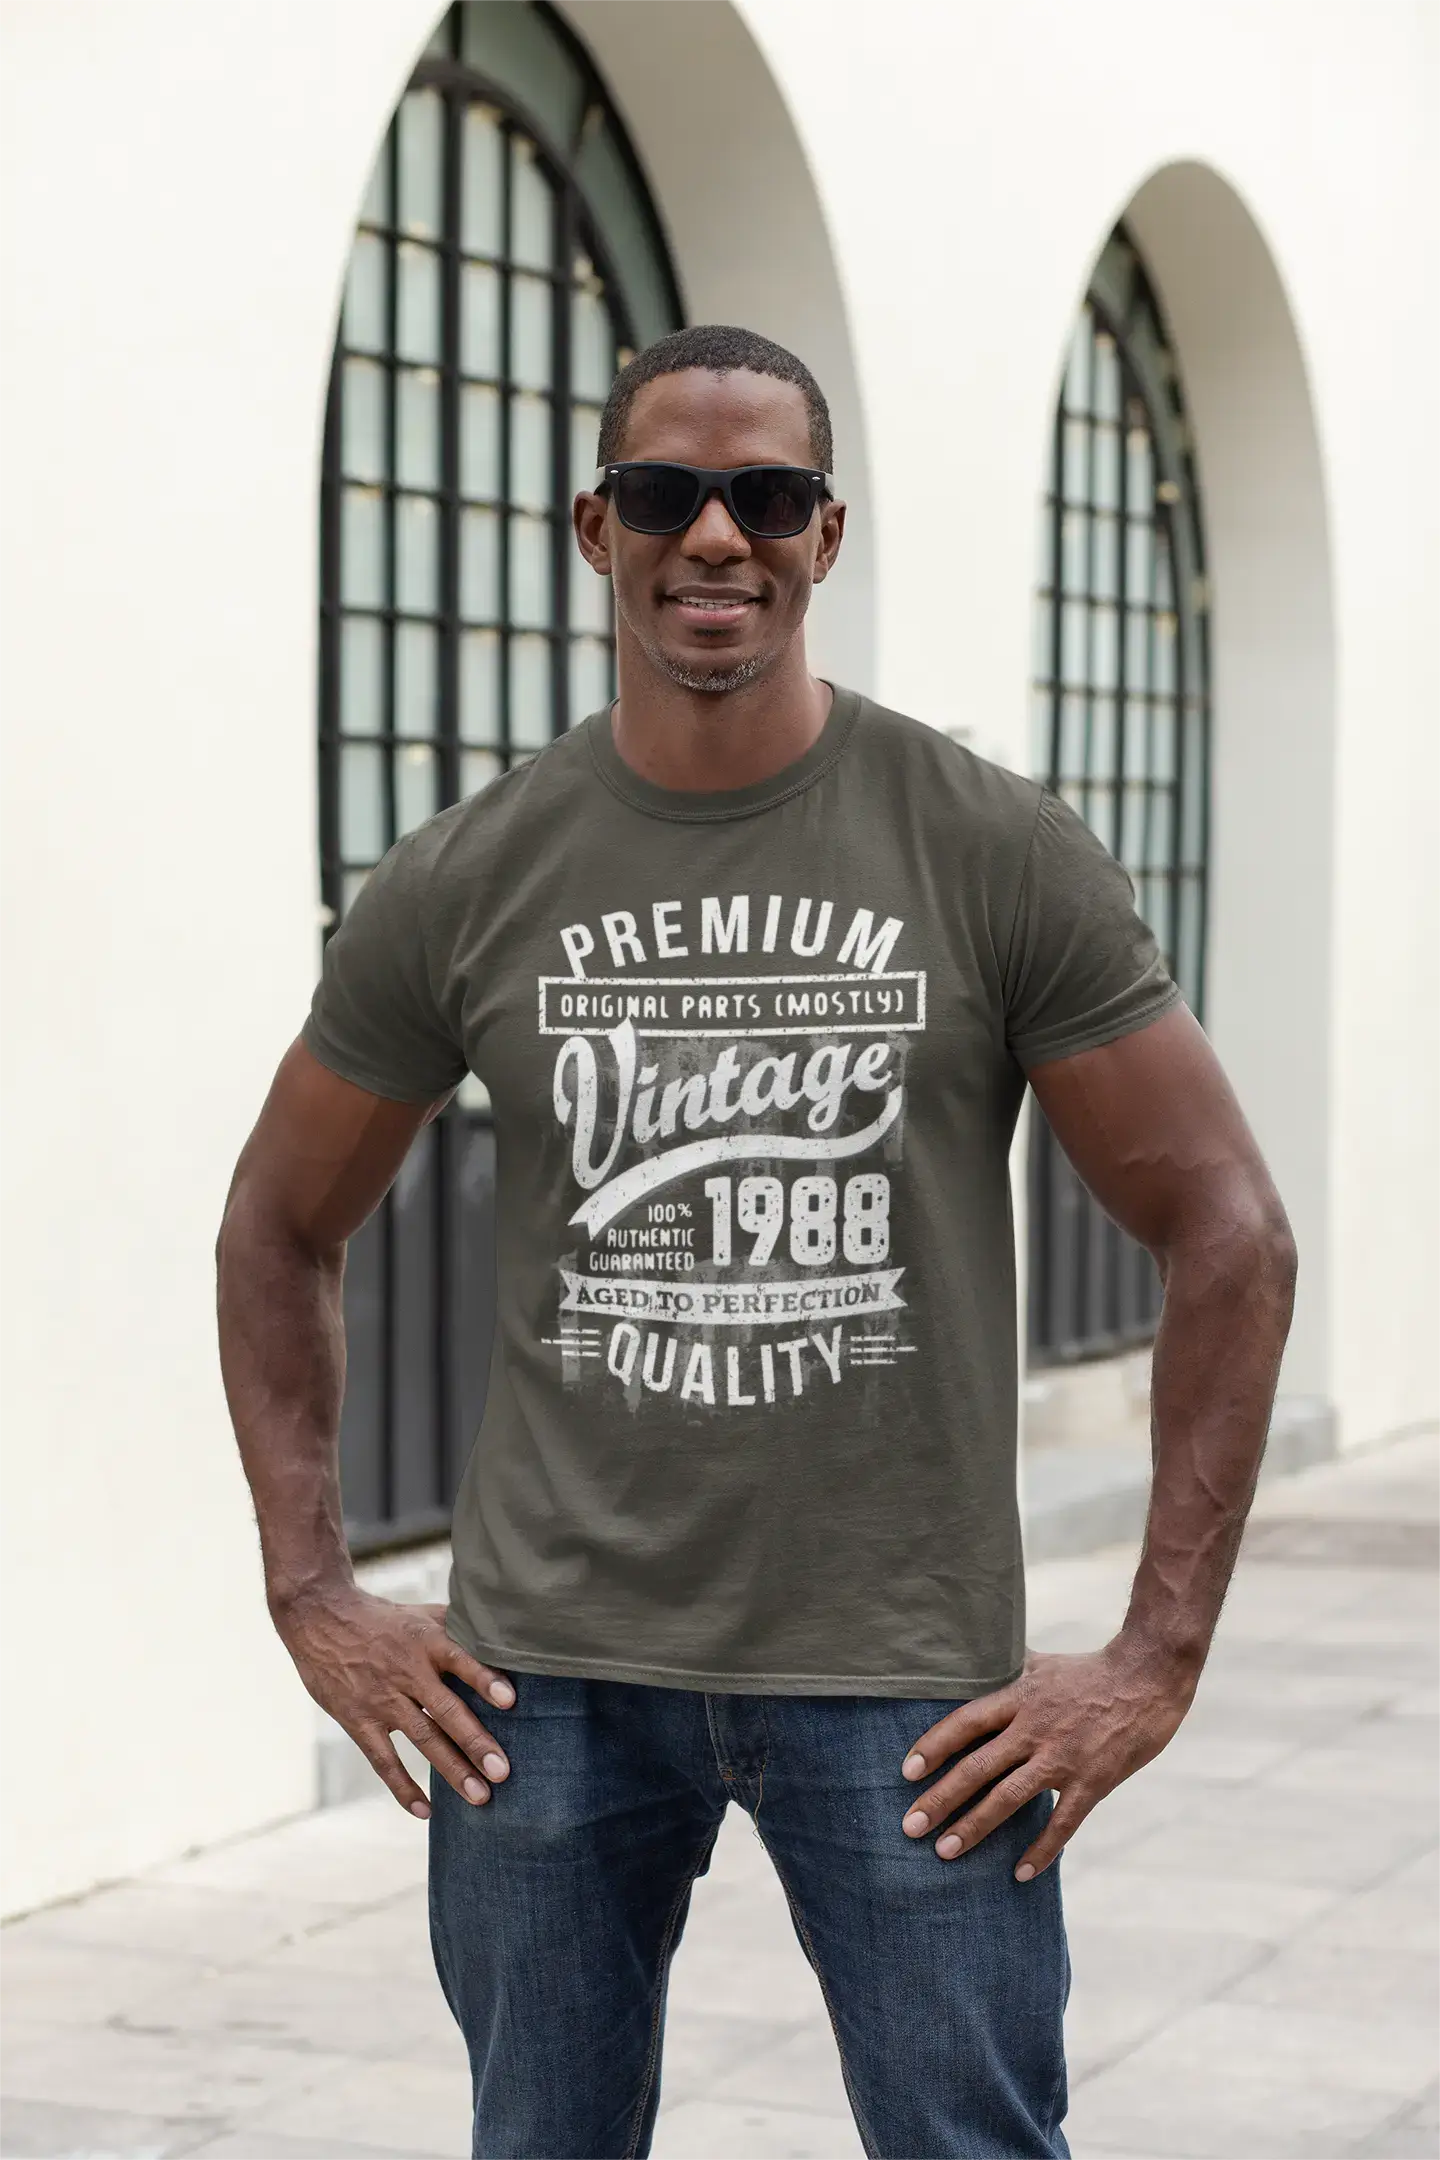 Ultrabasic - Homme T-Shirt Graphique 1988 Aged to Perfection Tee Shirt Cadeau d'anniversaire